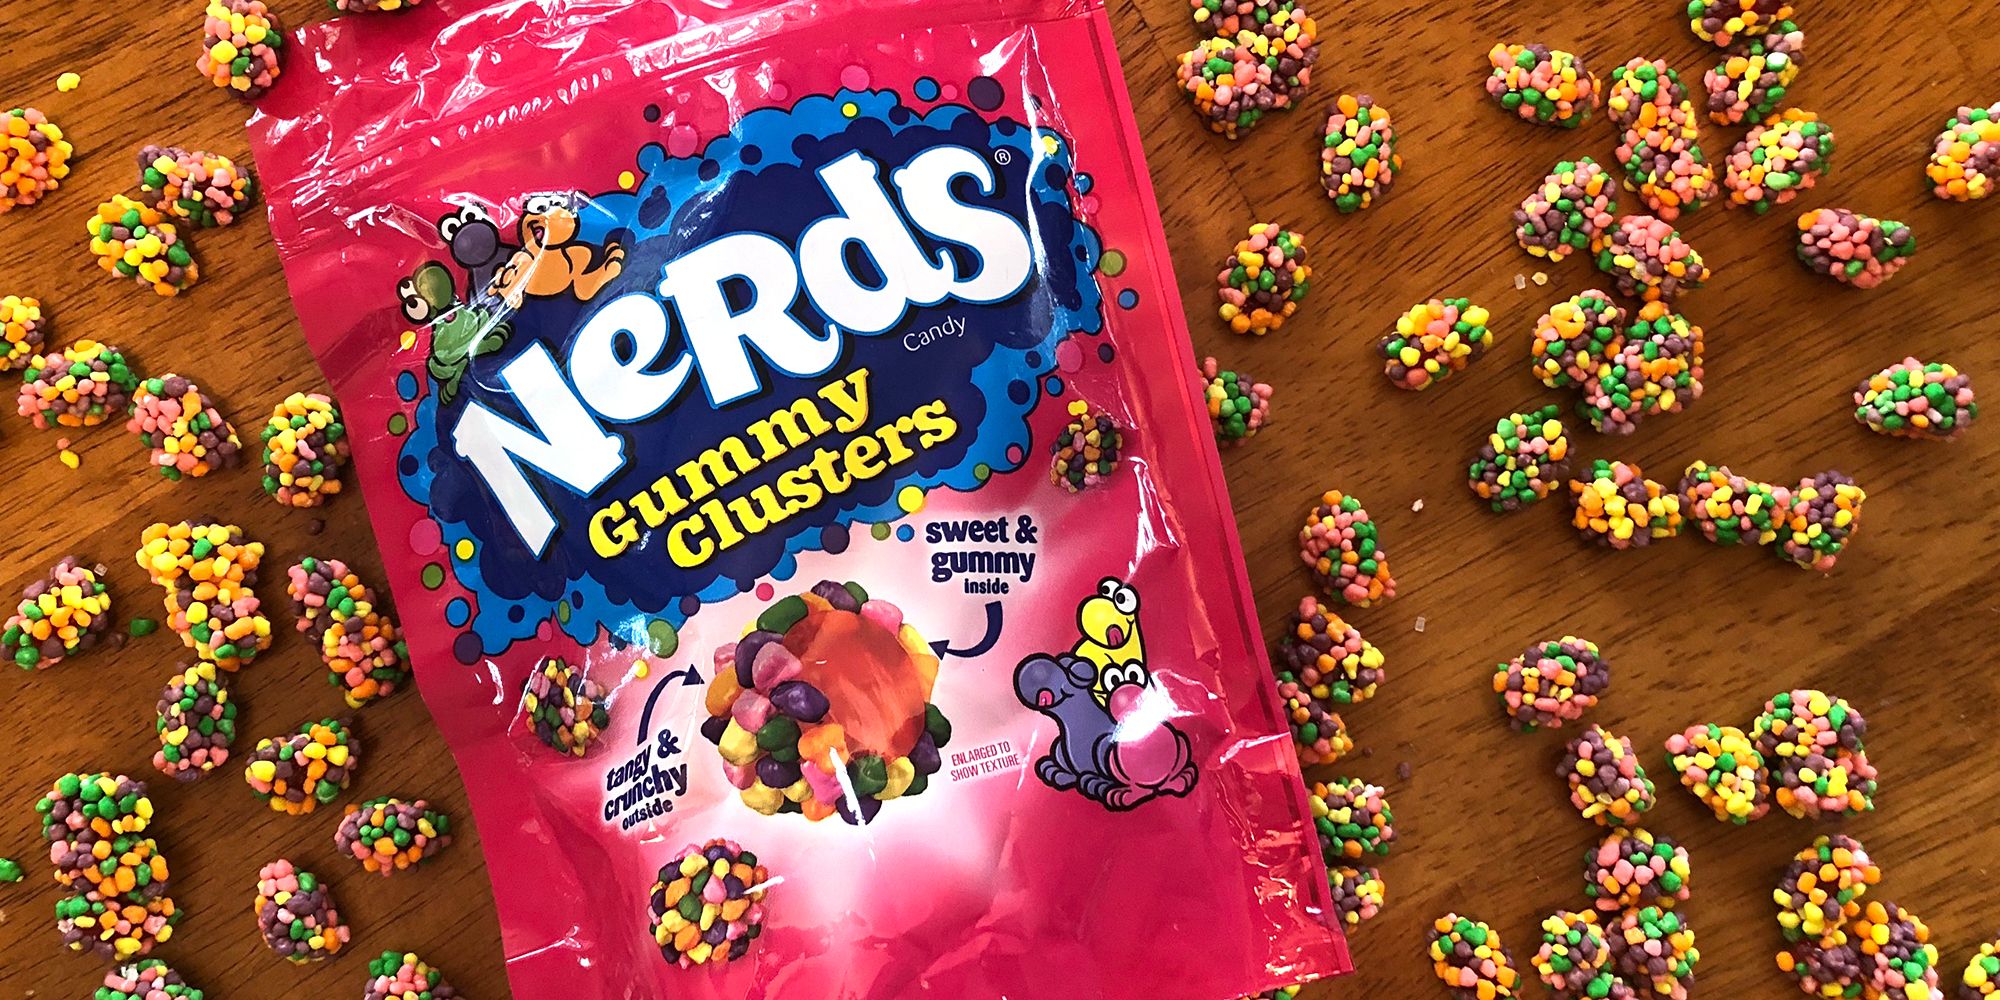 Nerds Gummy Crunch Clusters Bag